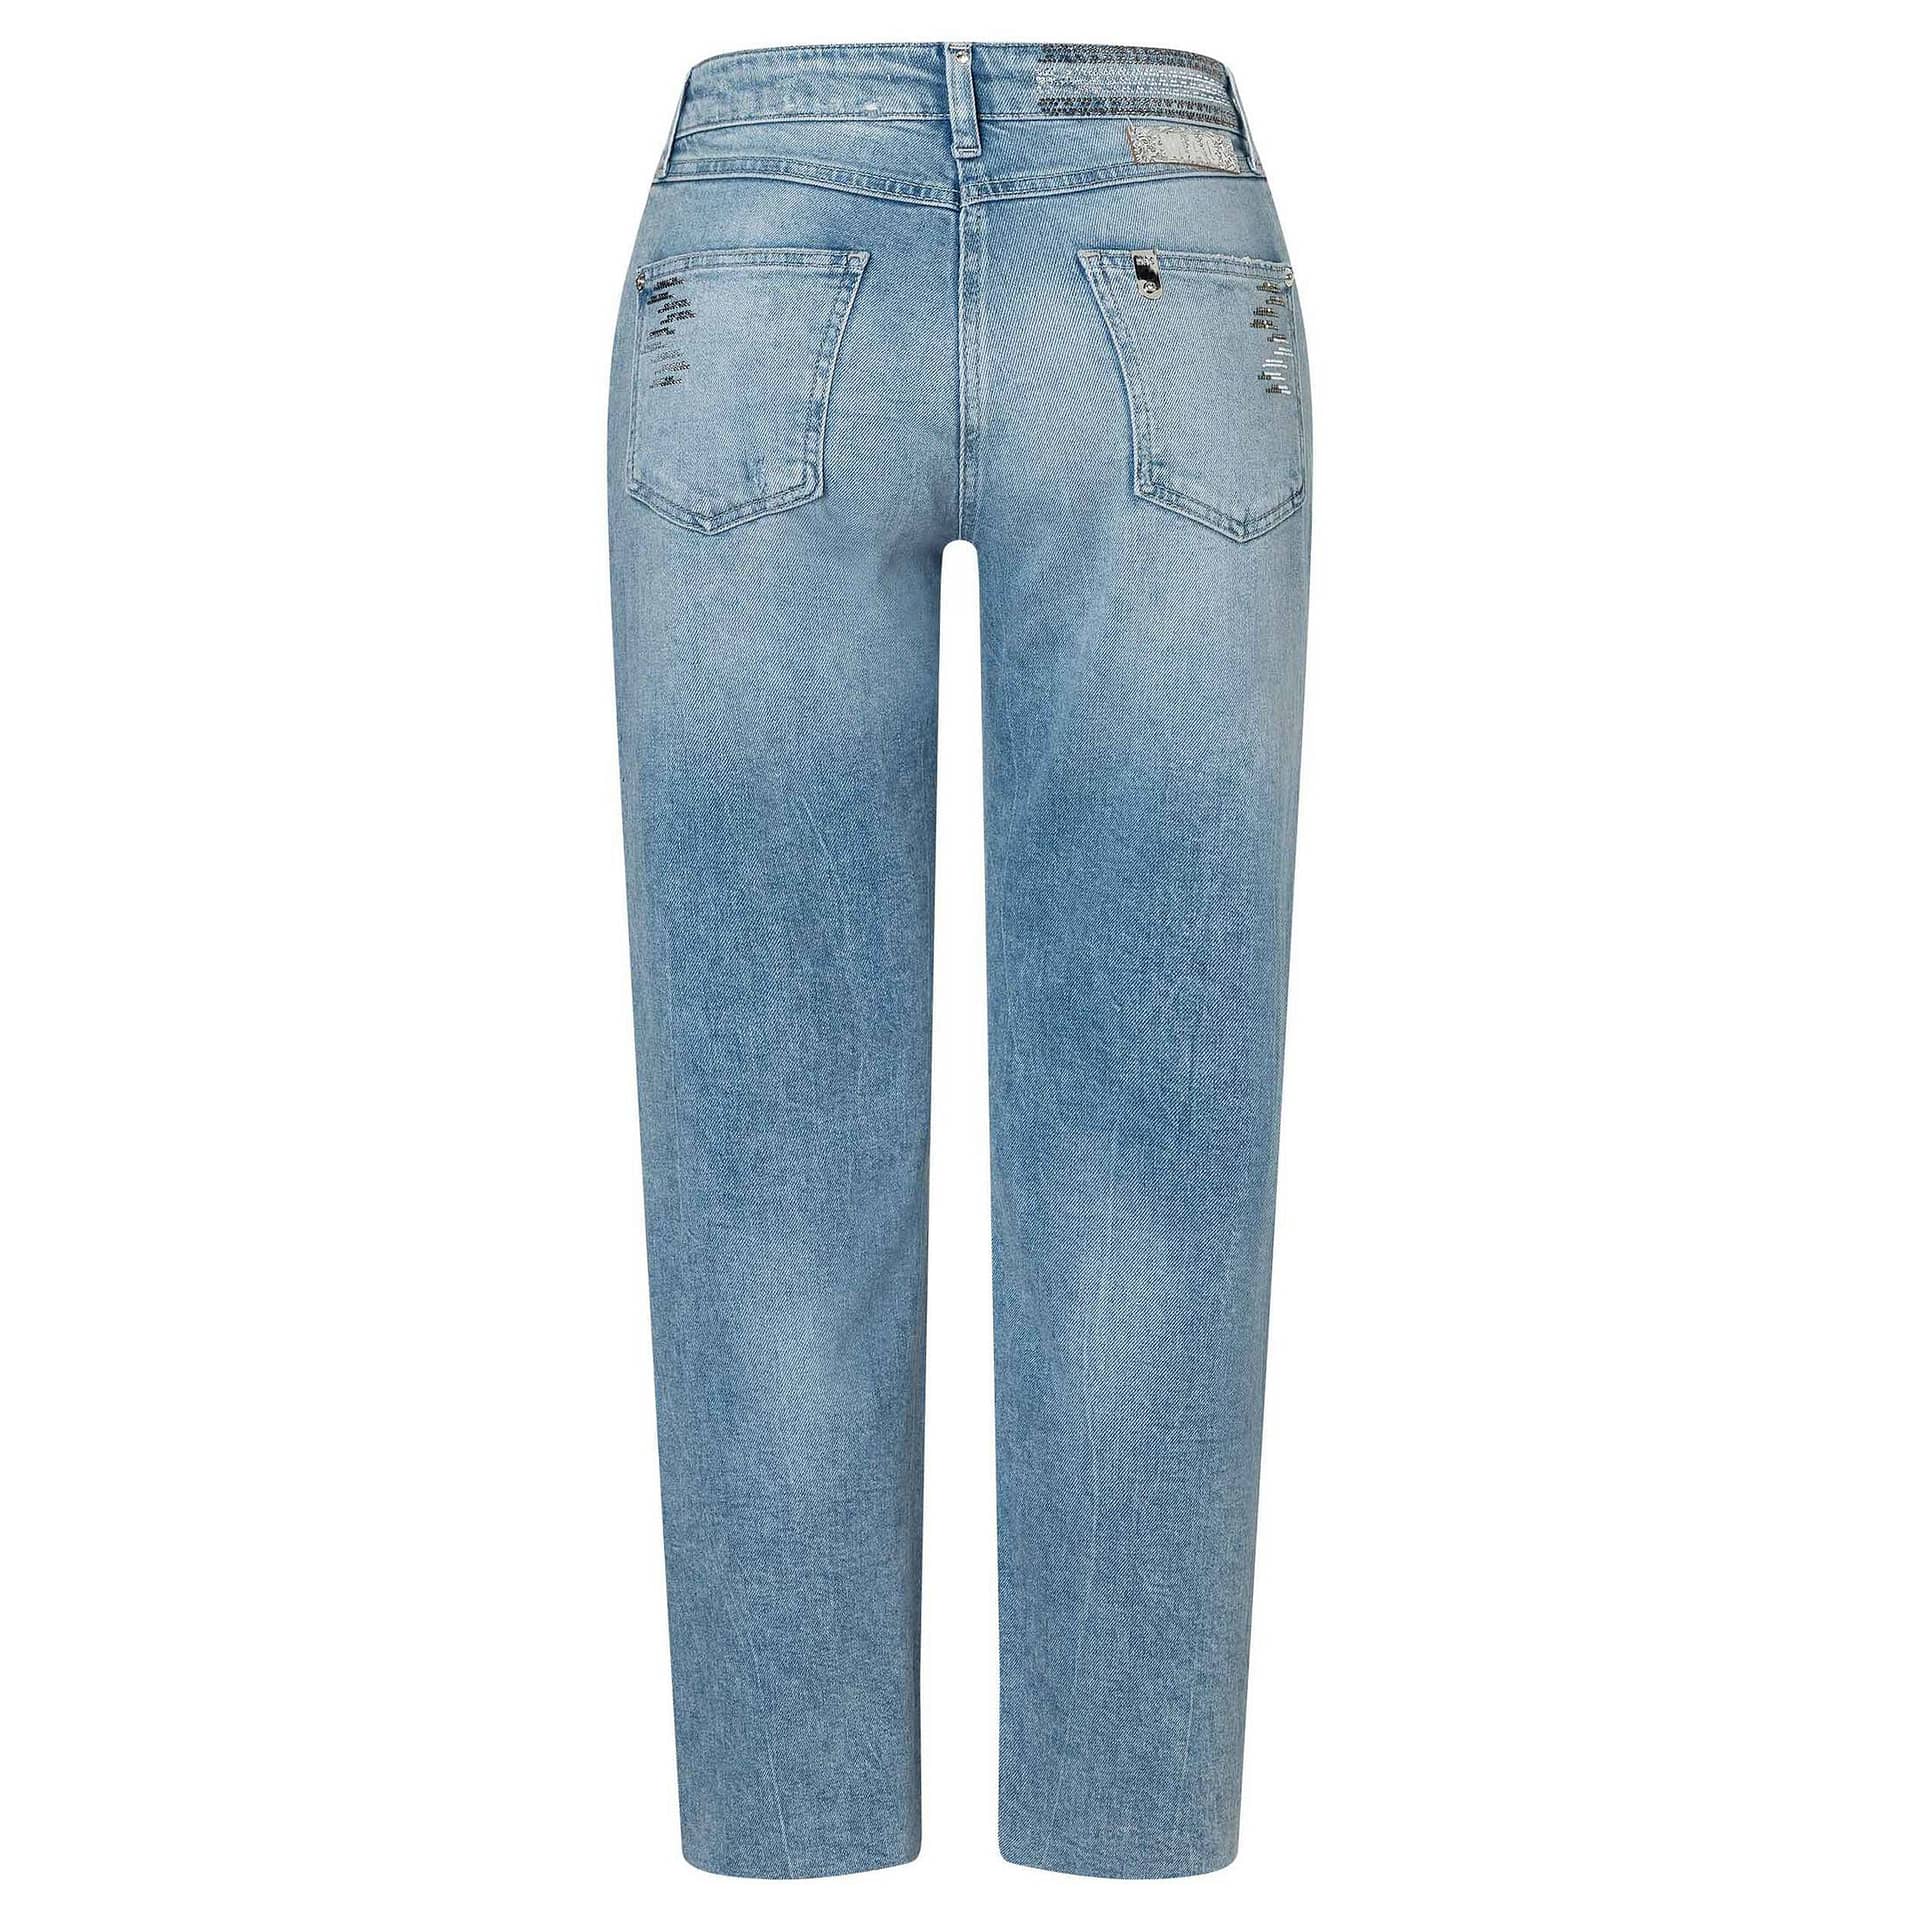 MAC • Criss Cross jeans • shop BollyWolly